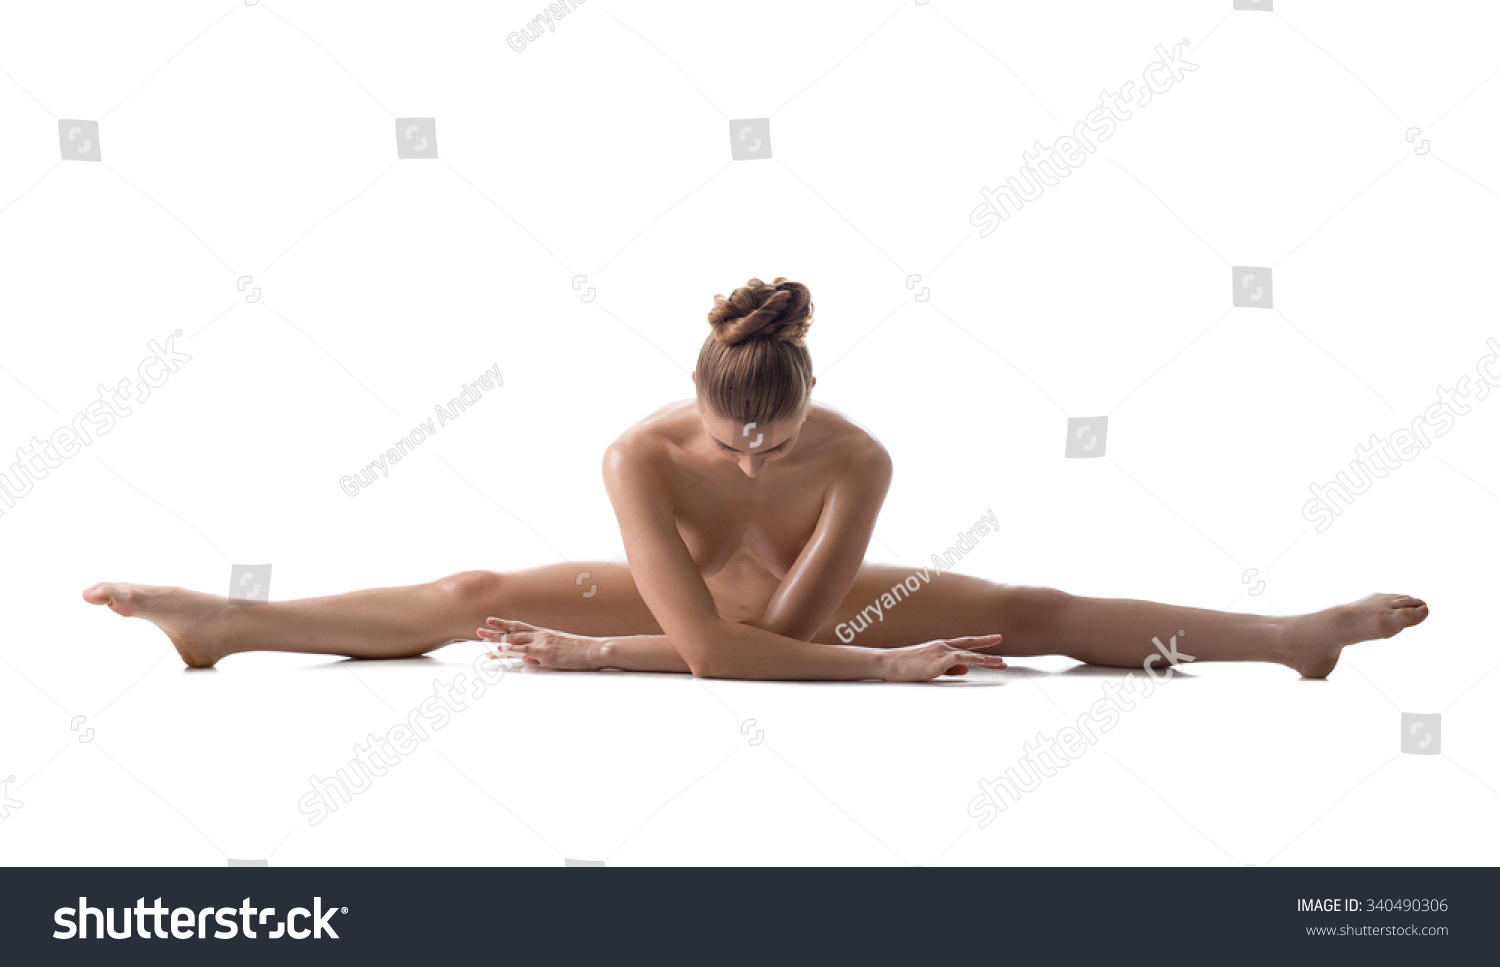 Naked Woman Doing The Splits 20